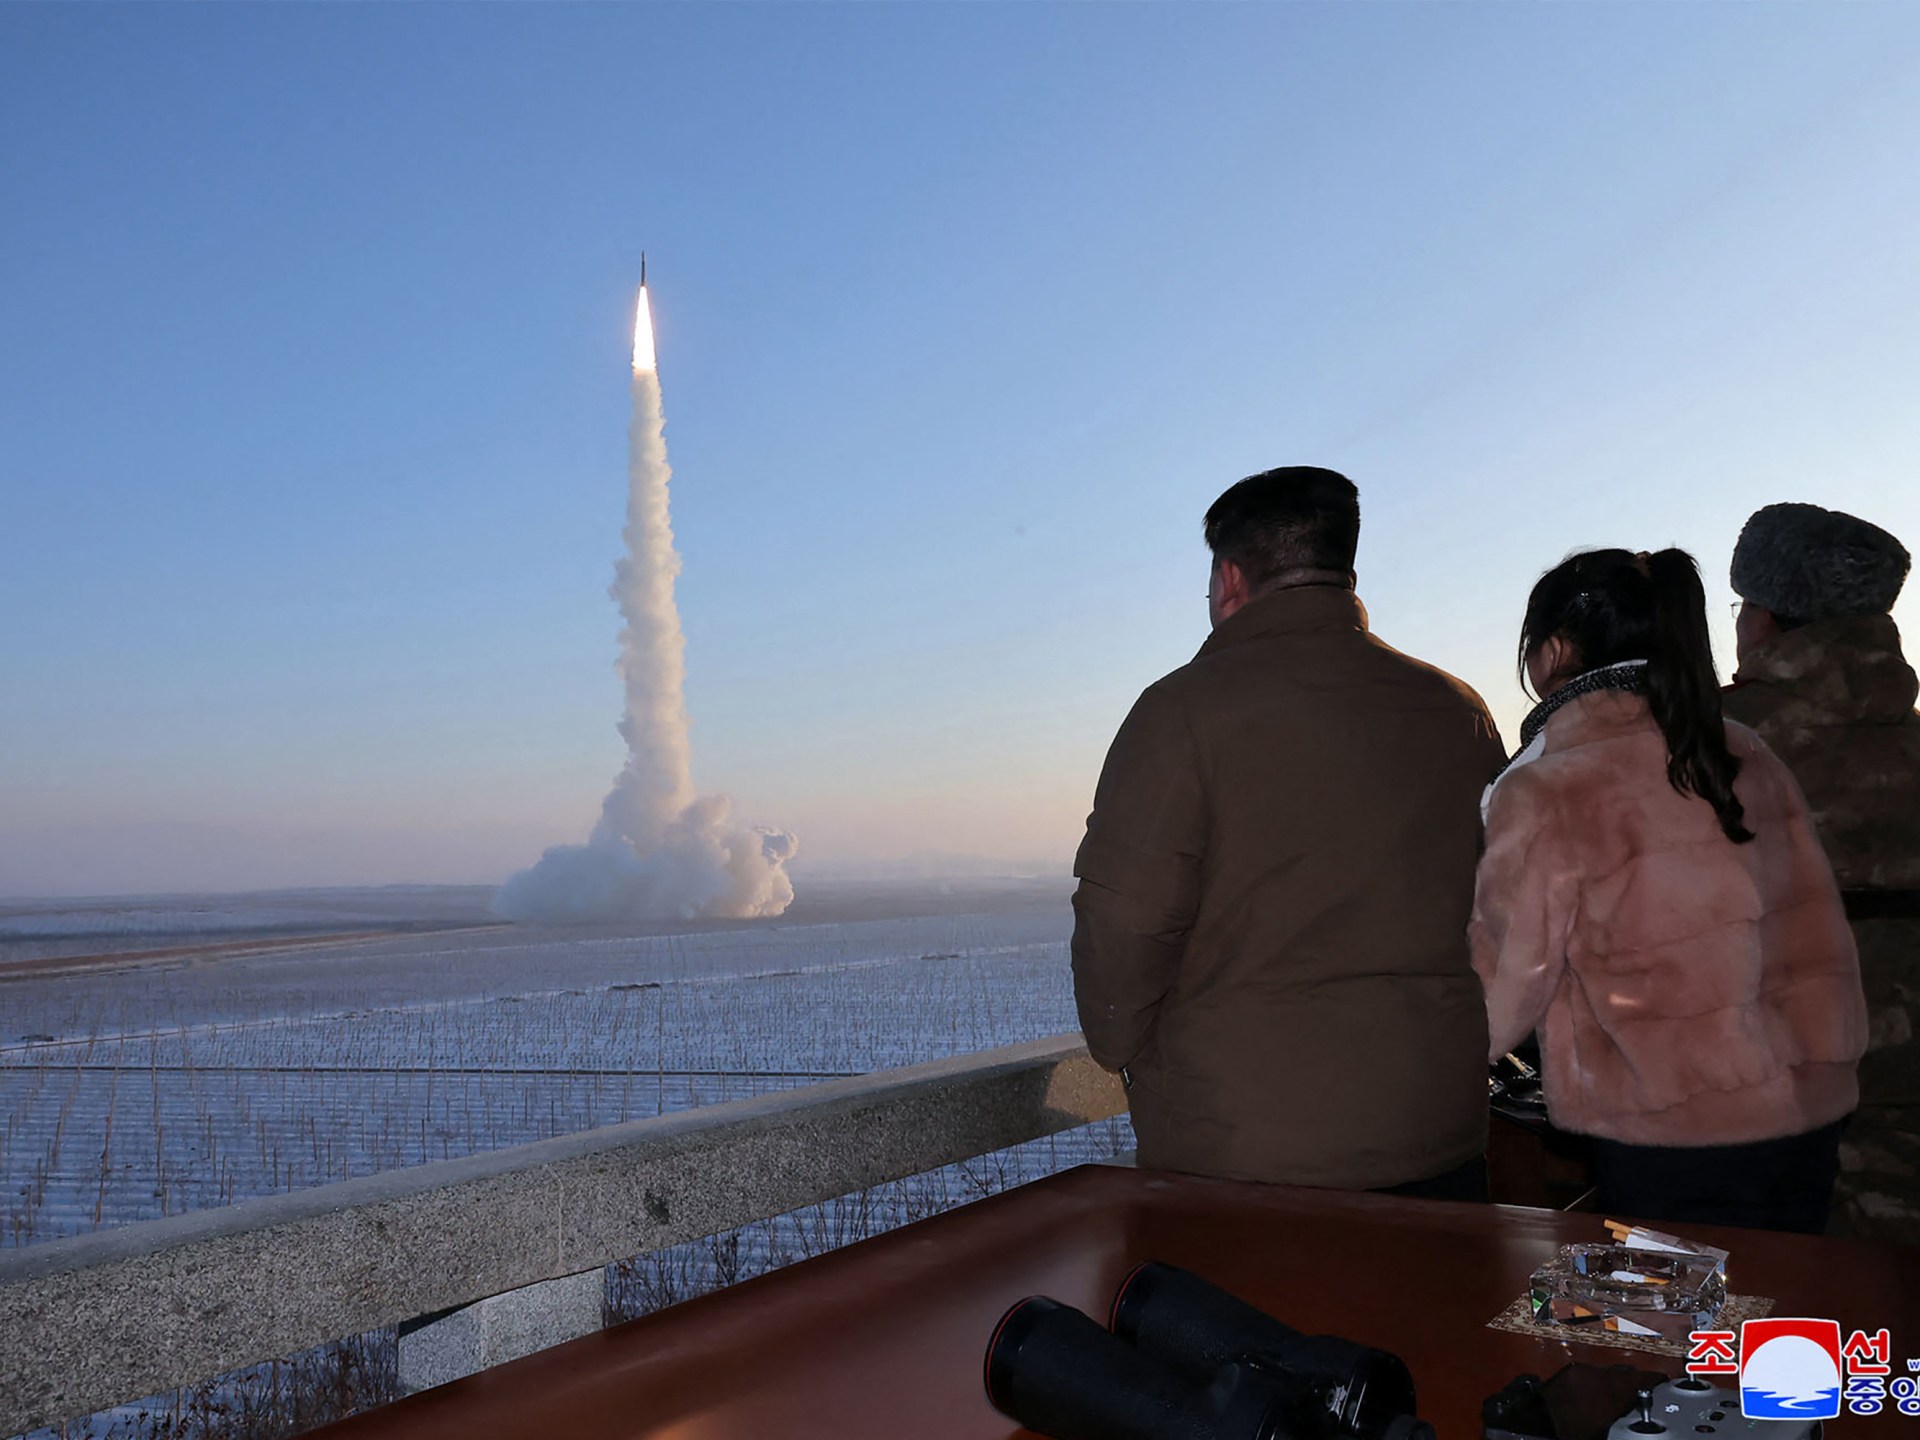 North Korea’s Kim personally oversaw ICBM launch, state media says